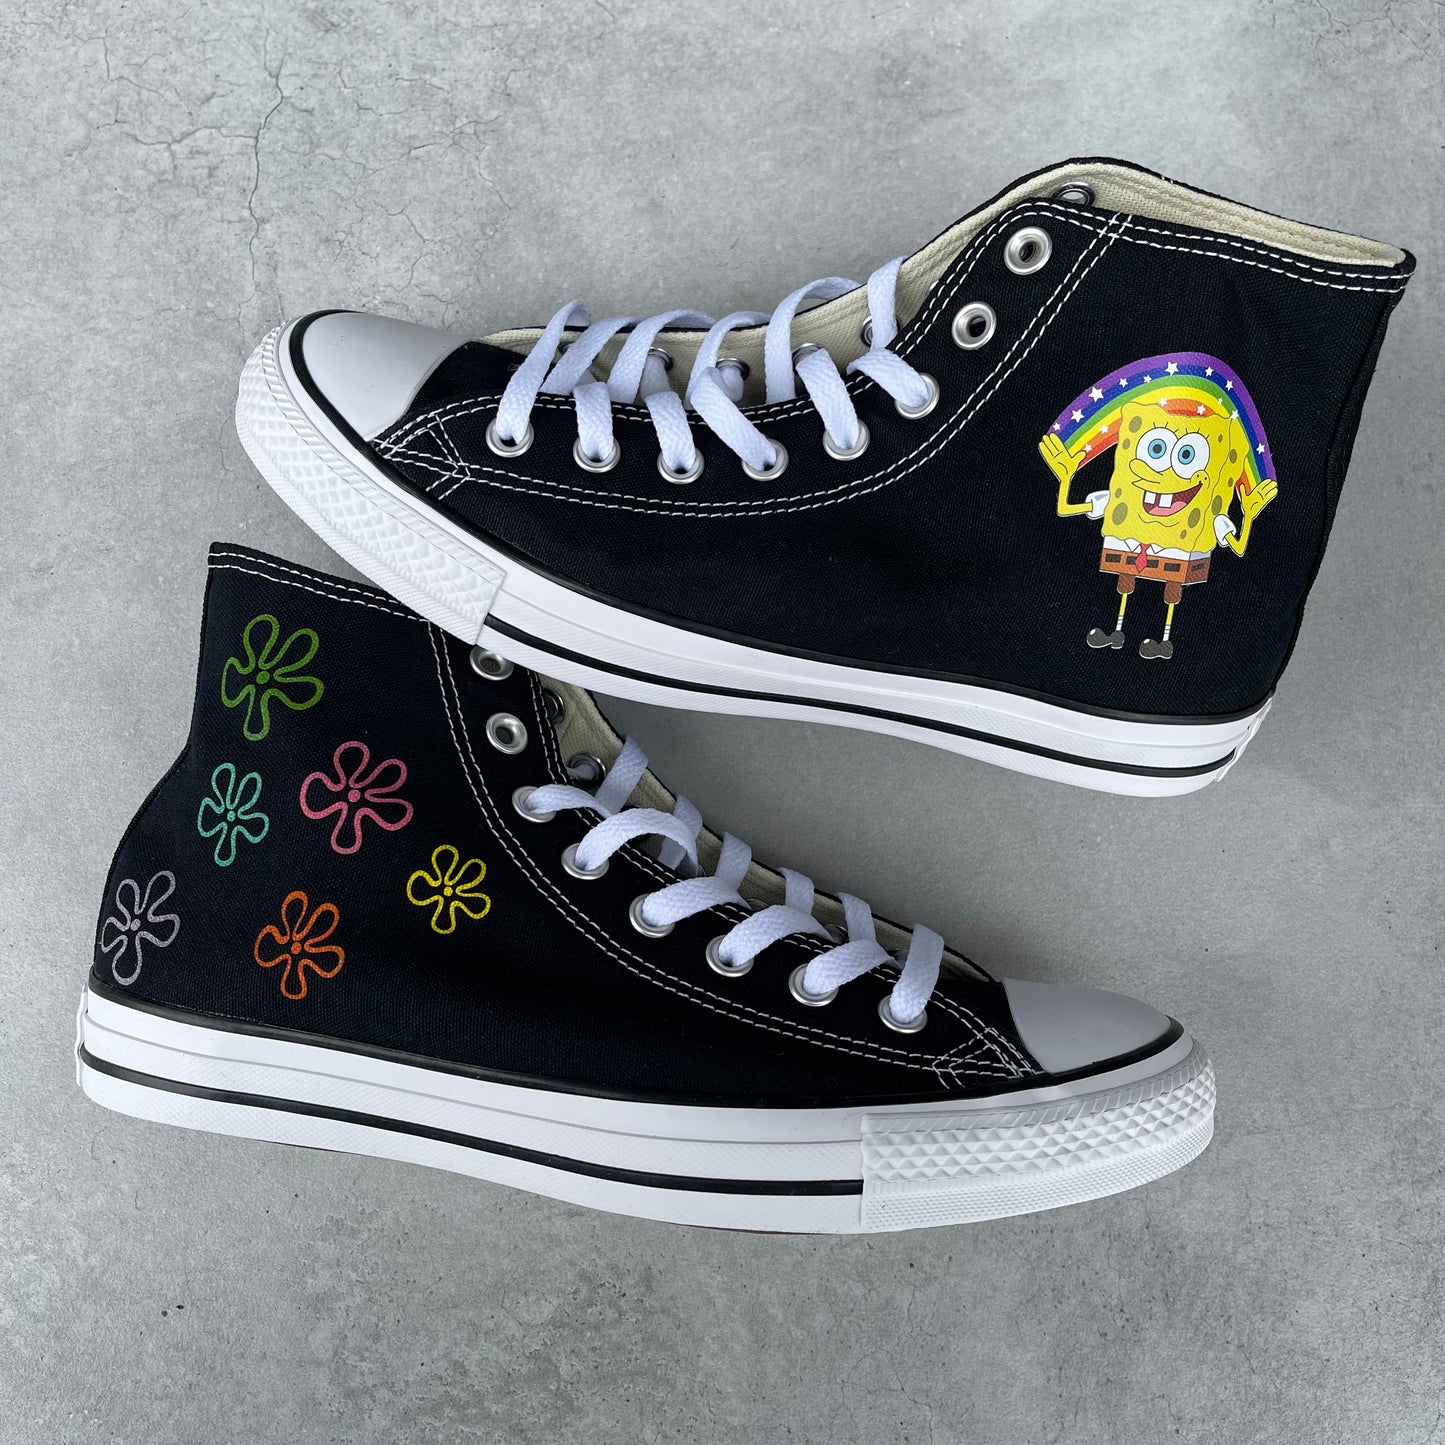 Custom Converse classic black - Spongebob